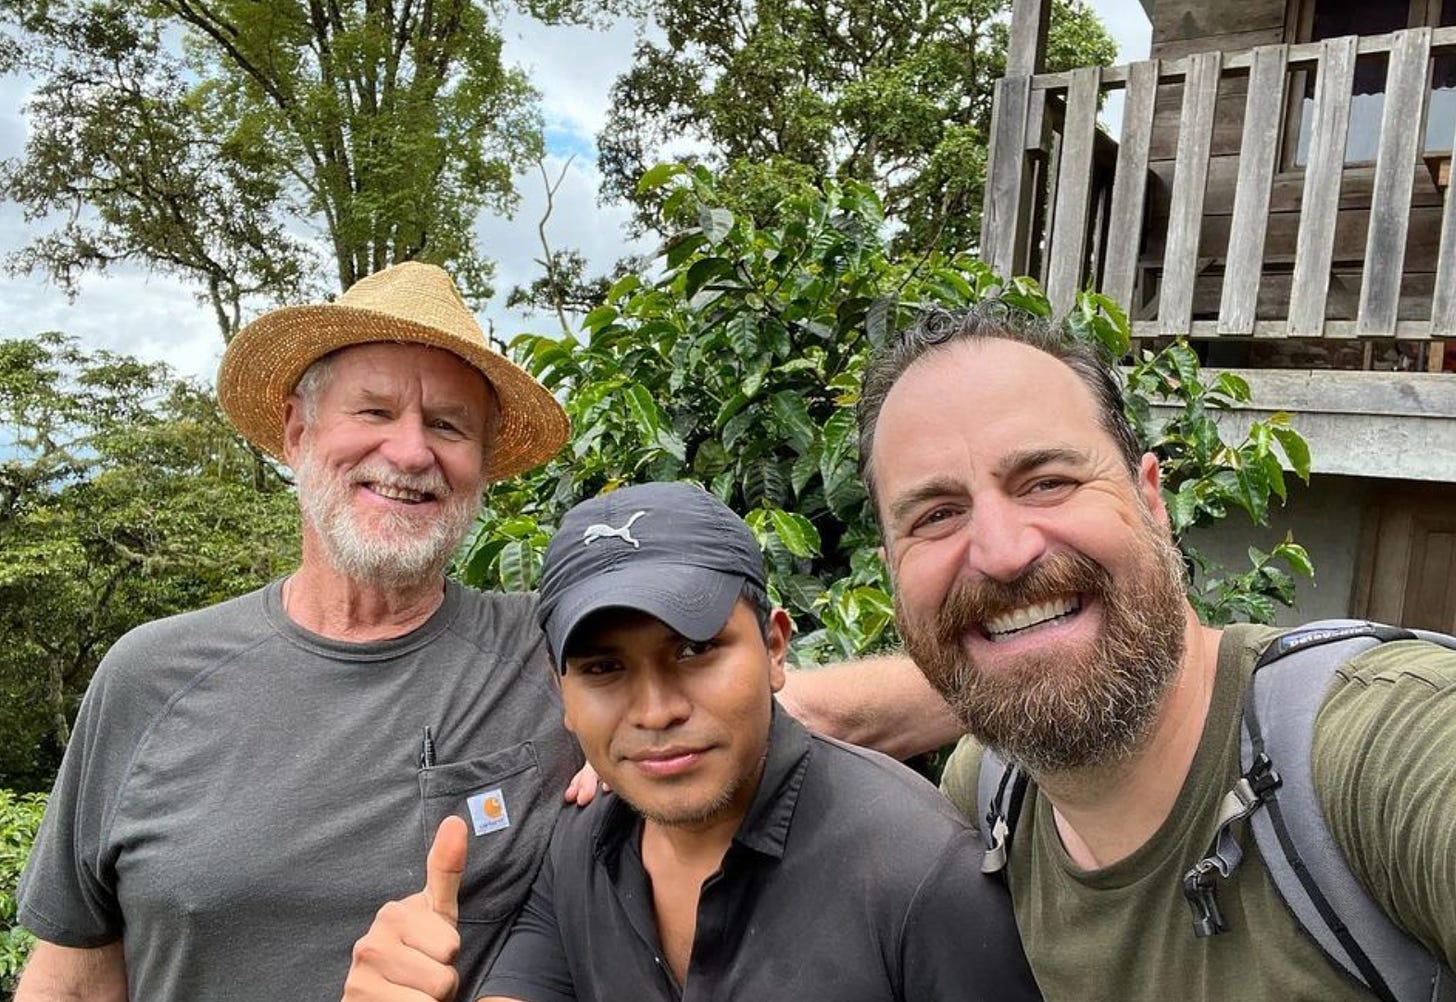 A selfie of three men arm-in-arm on a coffee farm in Latin America.